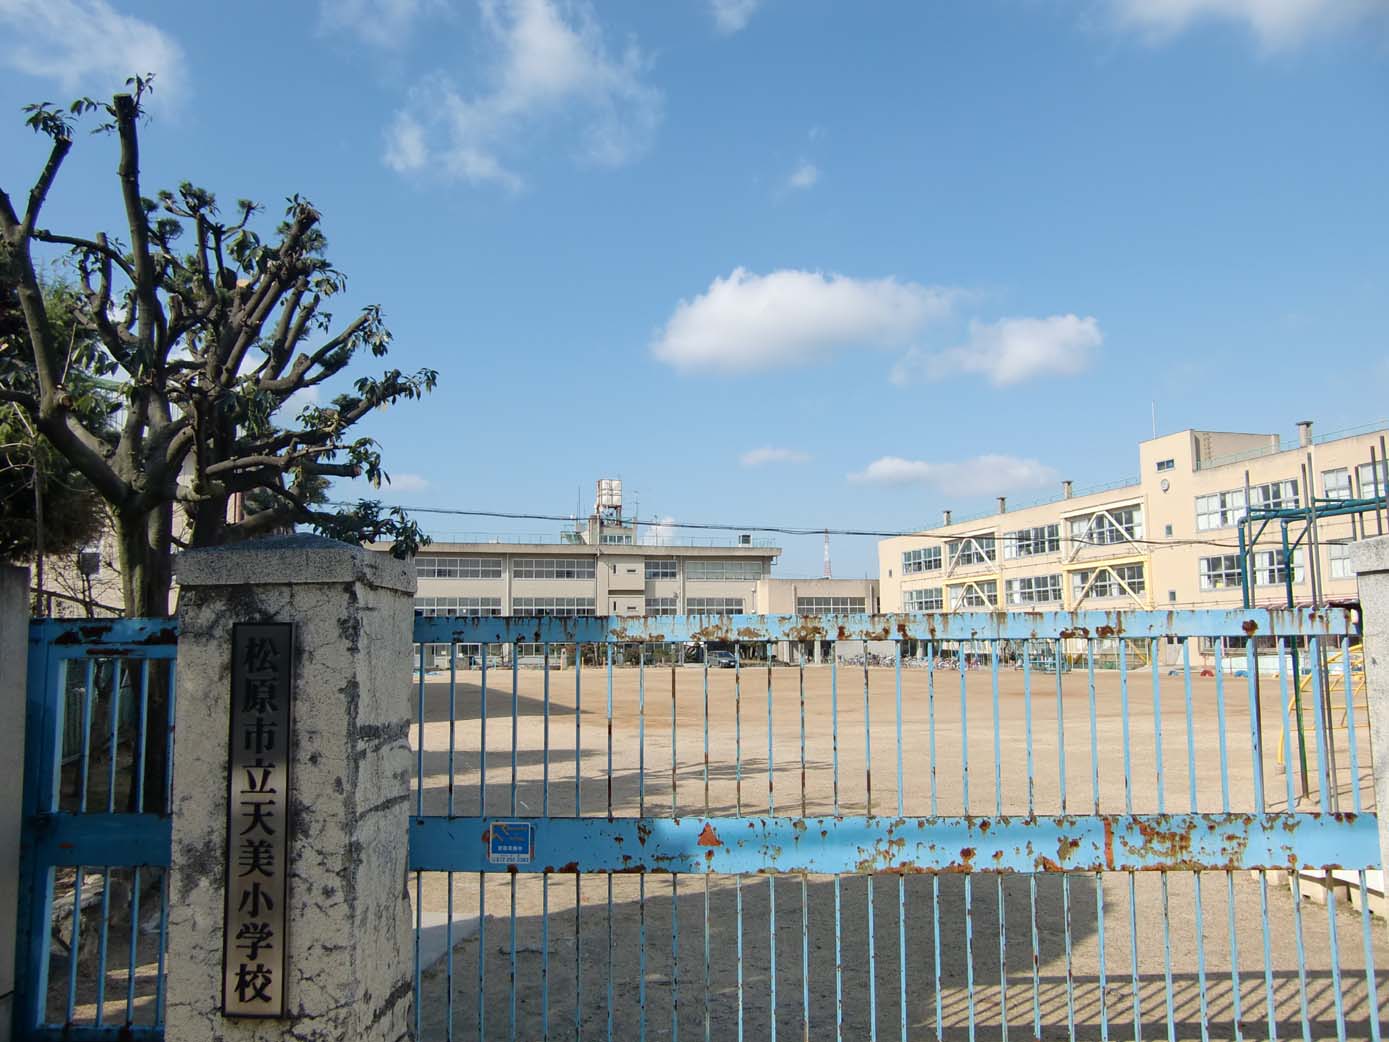 Primary school. Matsubara Municipal Amami up to elementary school (elementary school) 704m